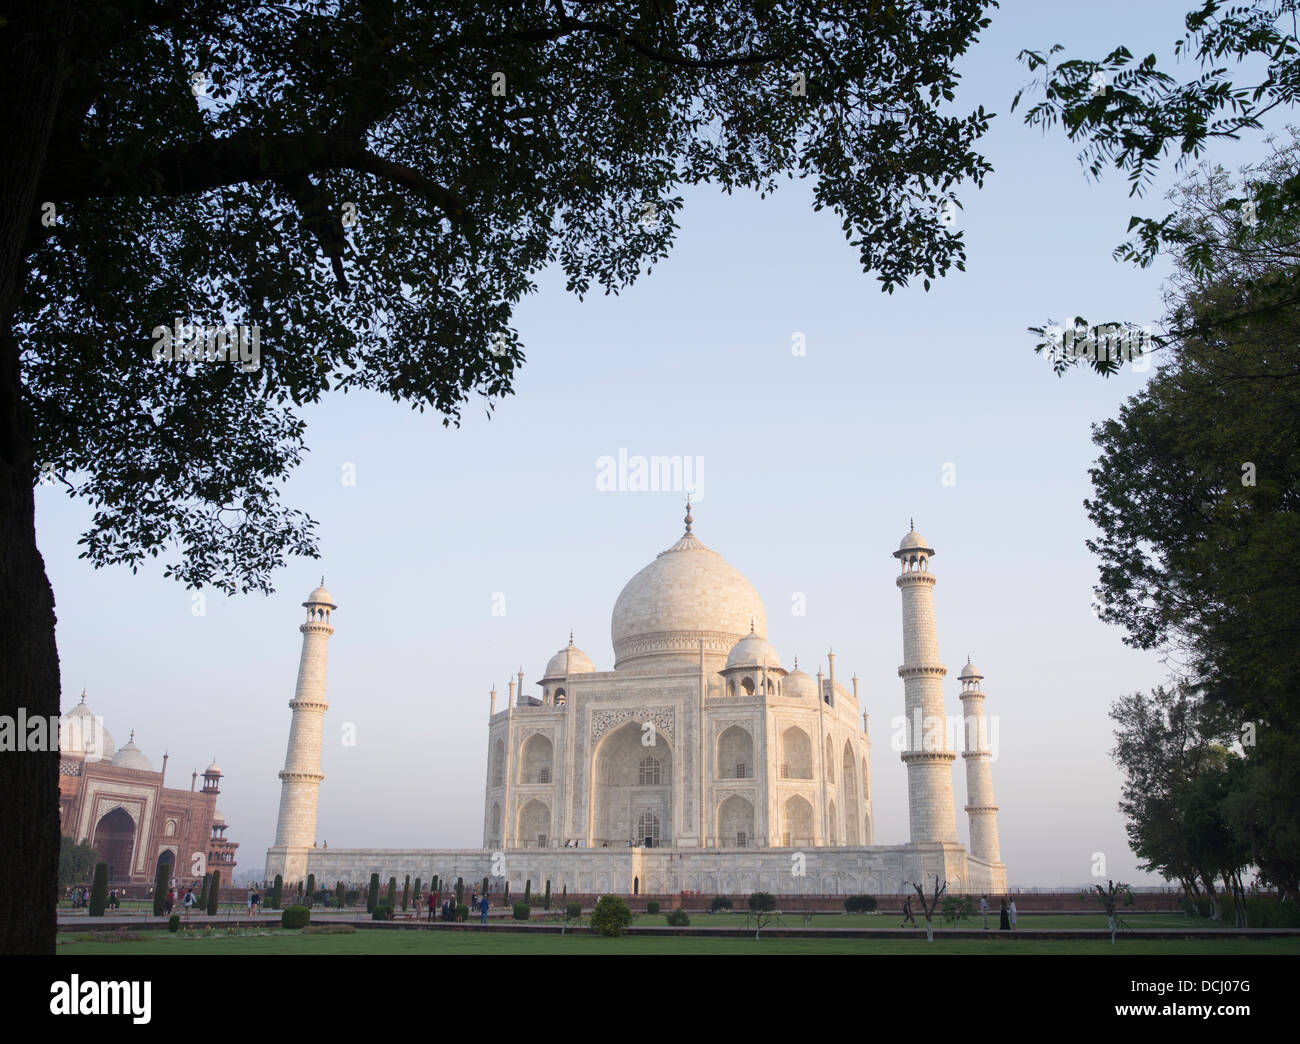 Taj Mahal White Marble Mausoleum - Agra, India a UNESCO World Heritage Site Stock Photo